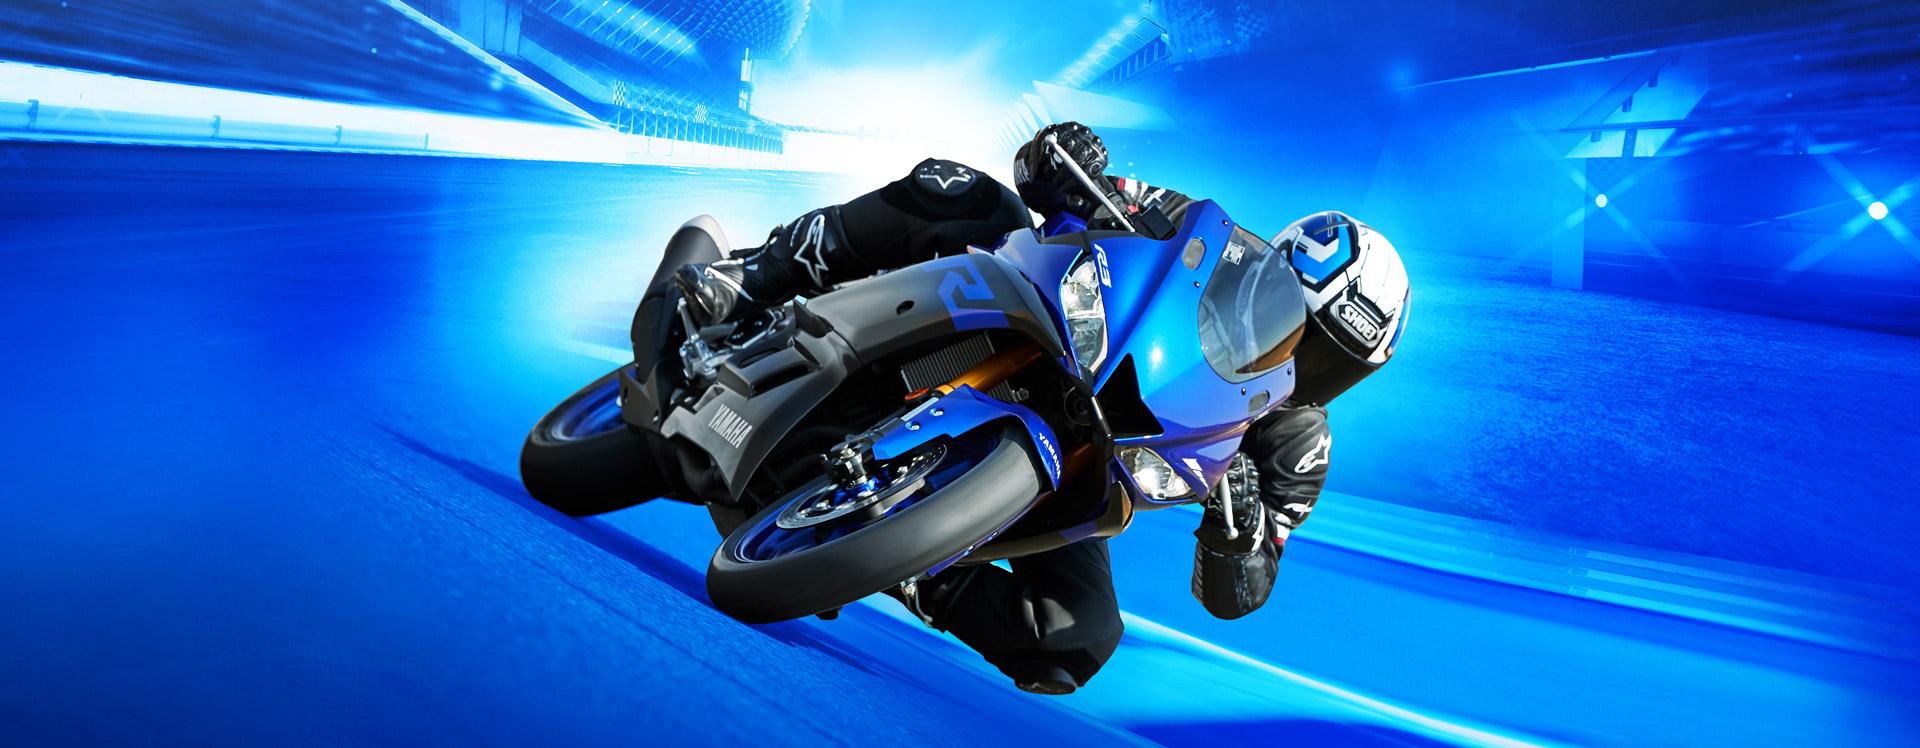 Yamaha YZF R3 Supersport Motorcycle